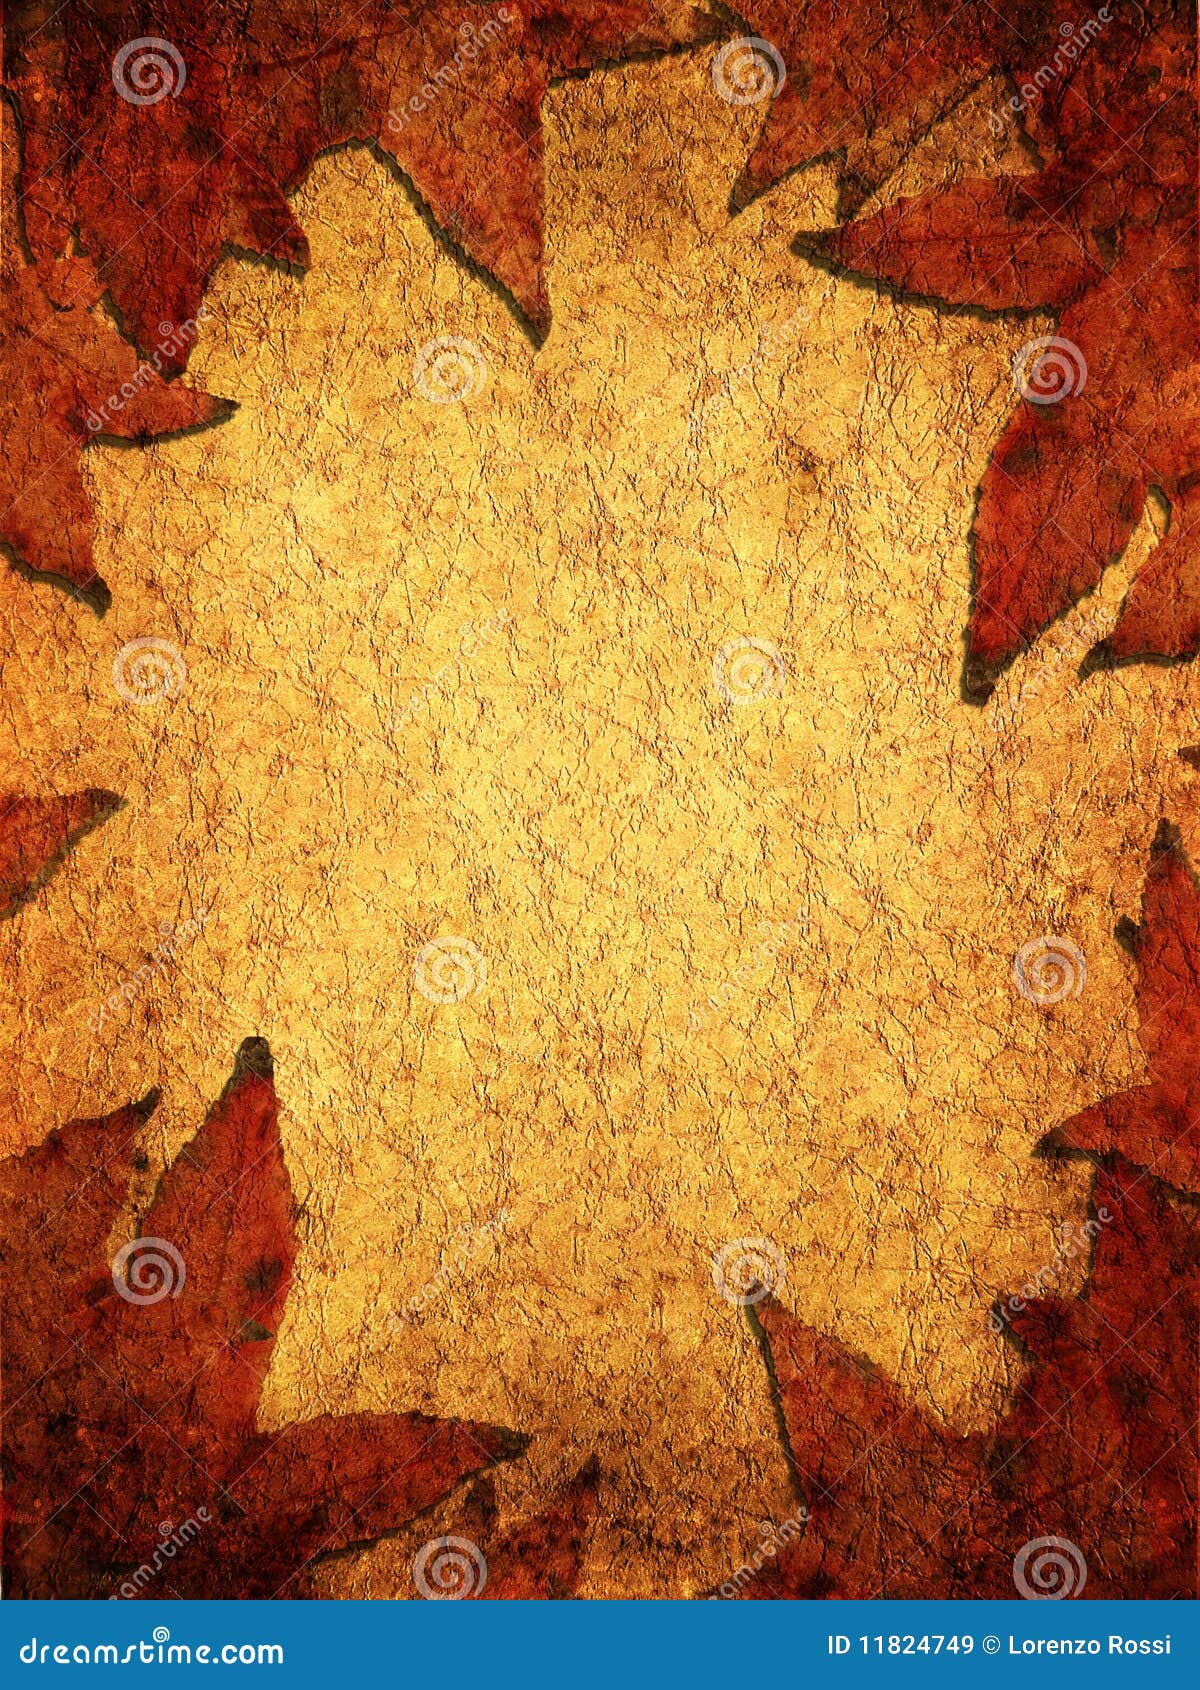 Dry leaves background stock image. Image of herbarium - 11824749